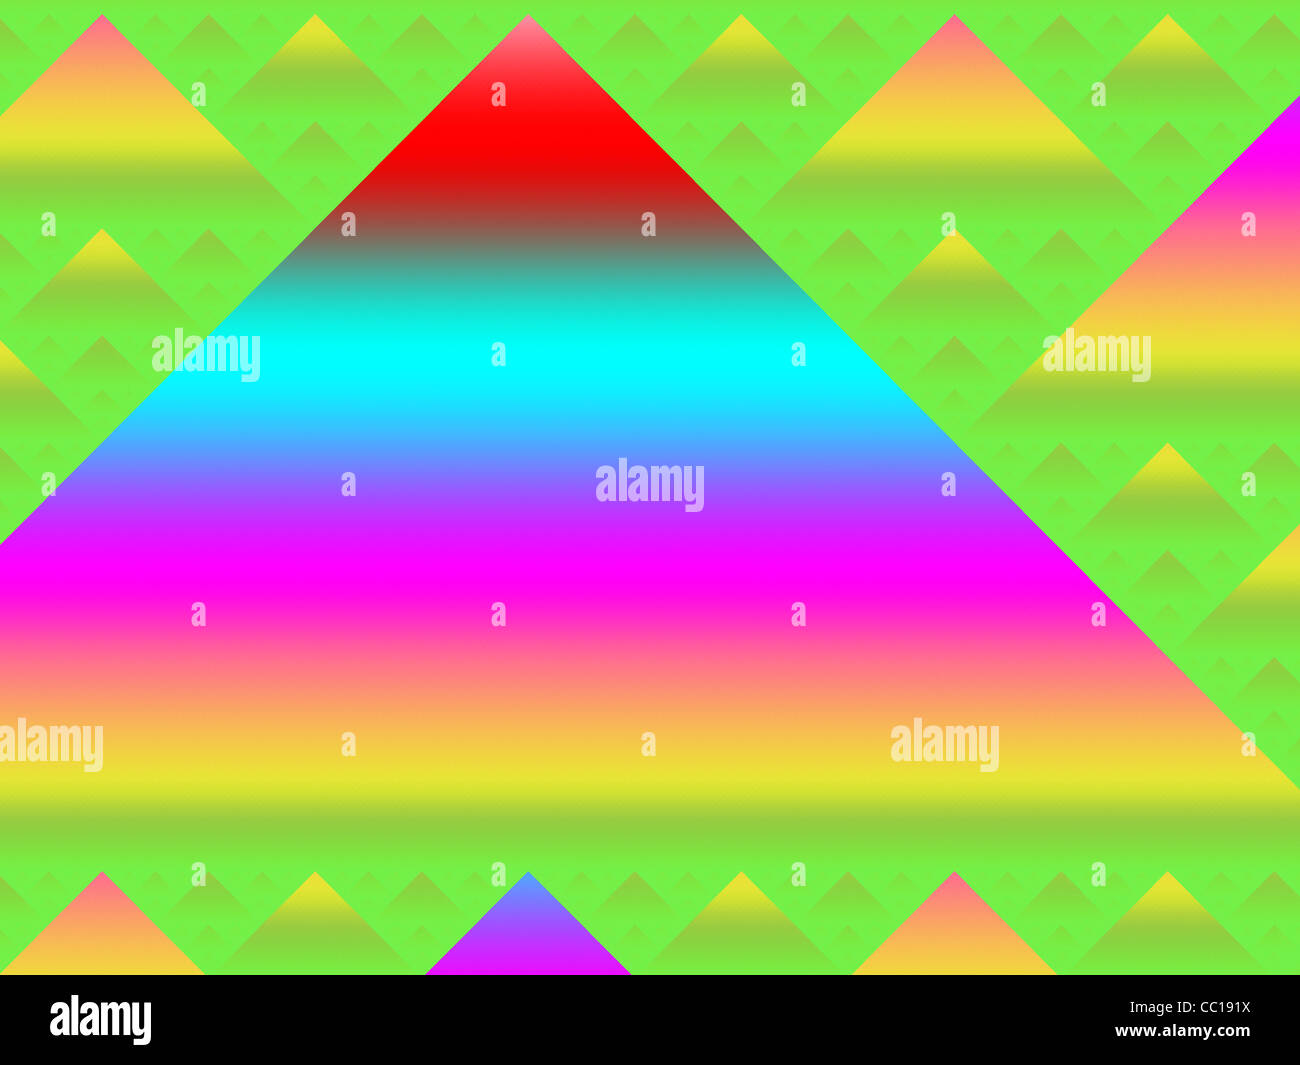 Sierpinski Triangle Fractal Design Stock Photo